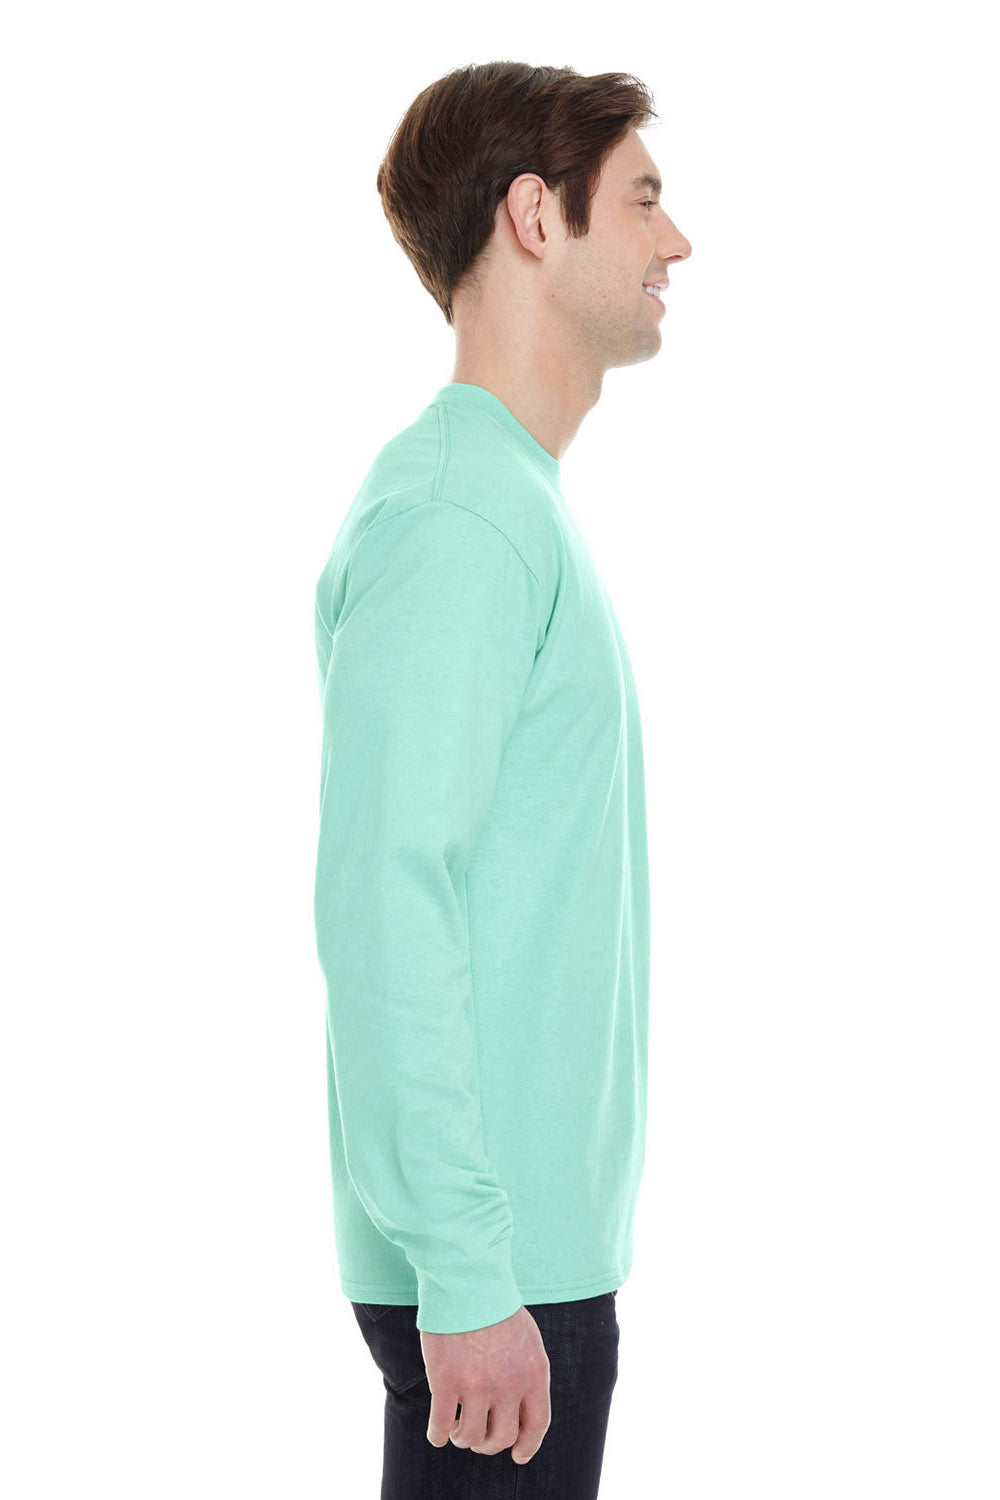 Hanes 5186 Mens Beefy-T Long Sleeve Crewneck T-Shirt Mint Green Side